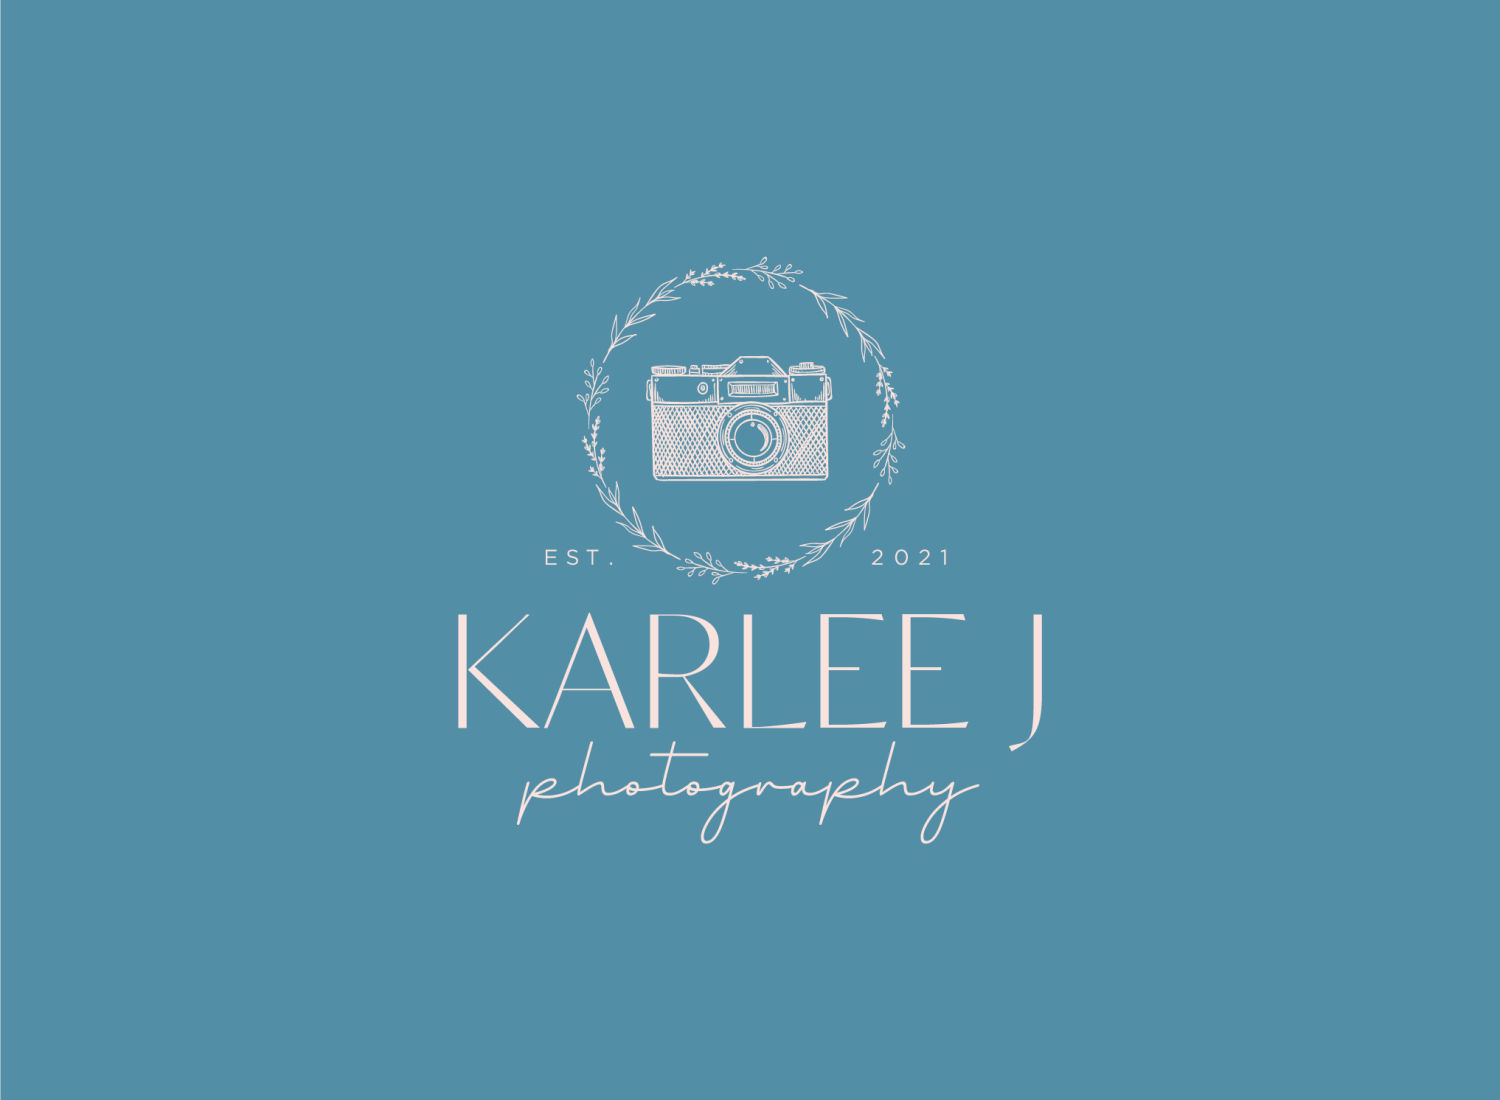 Karlee J Photography